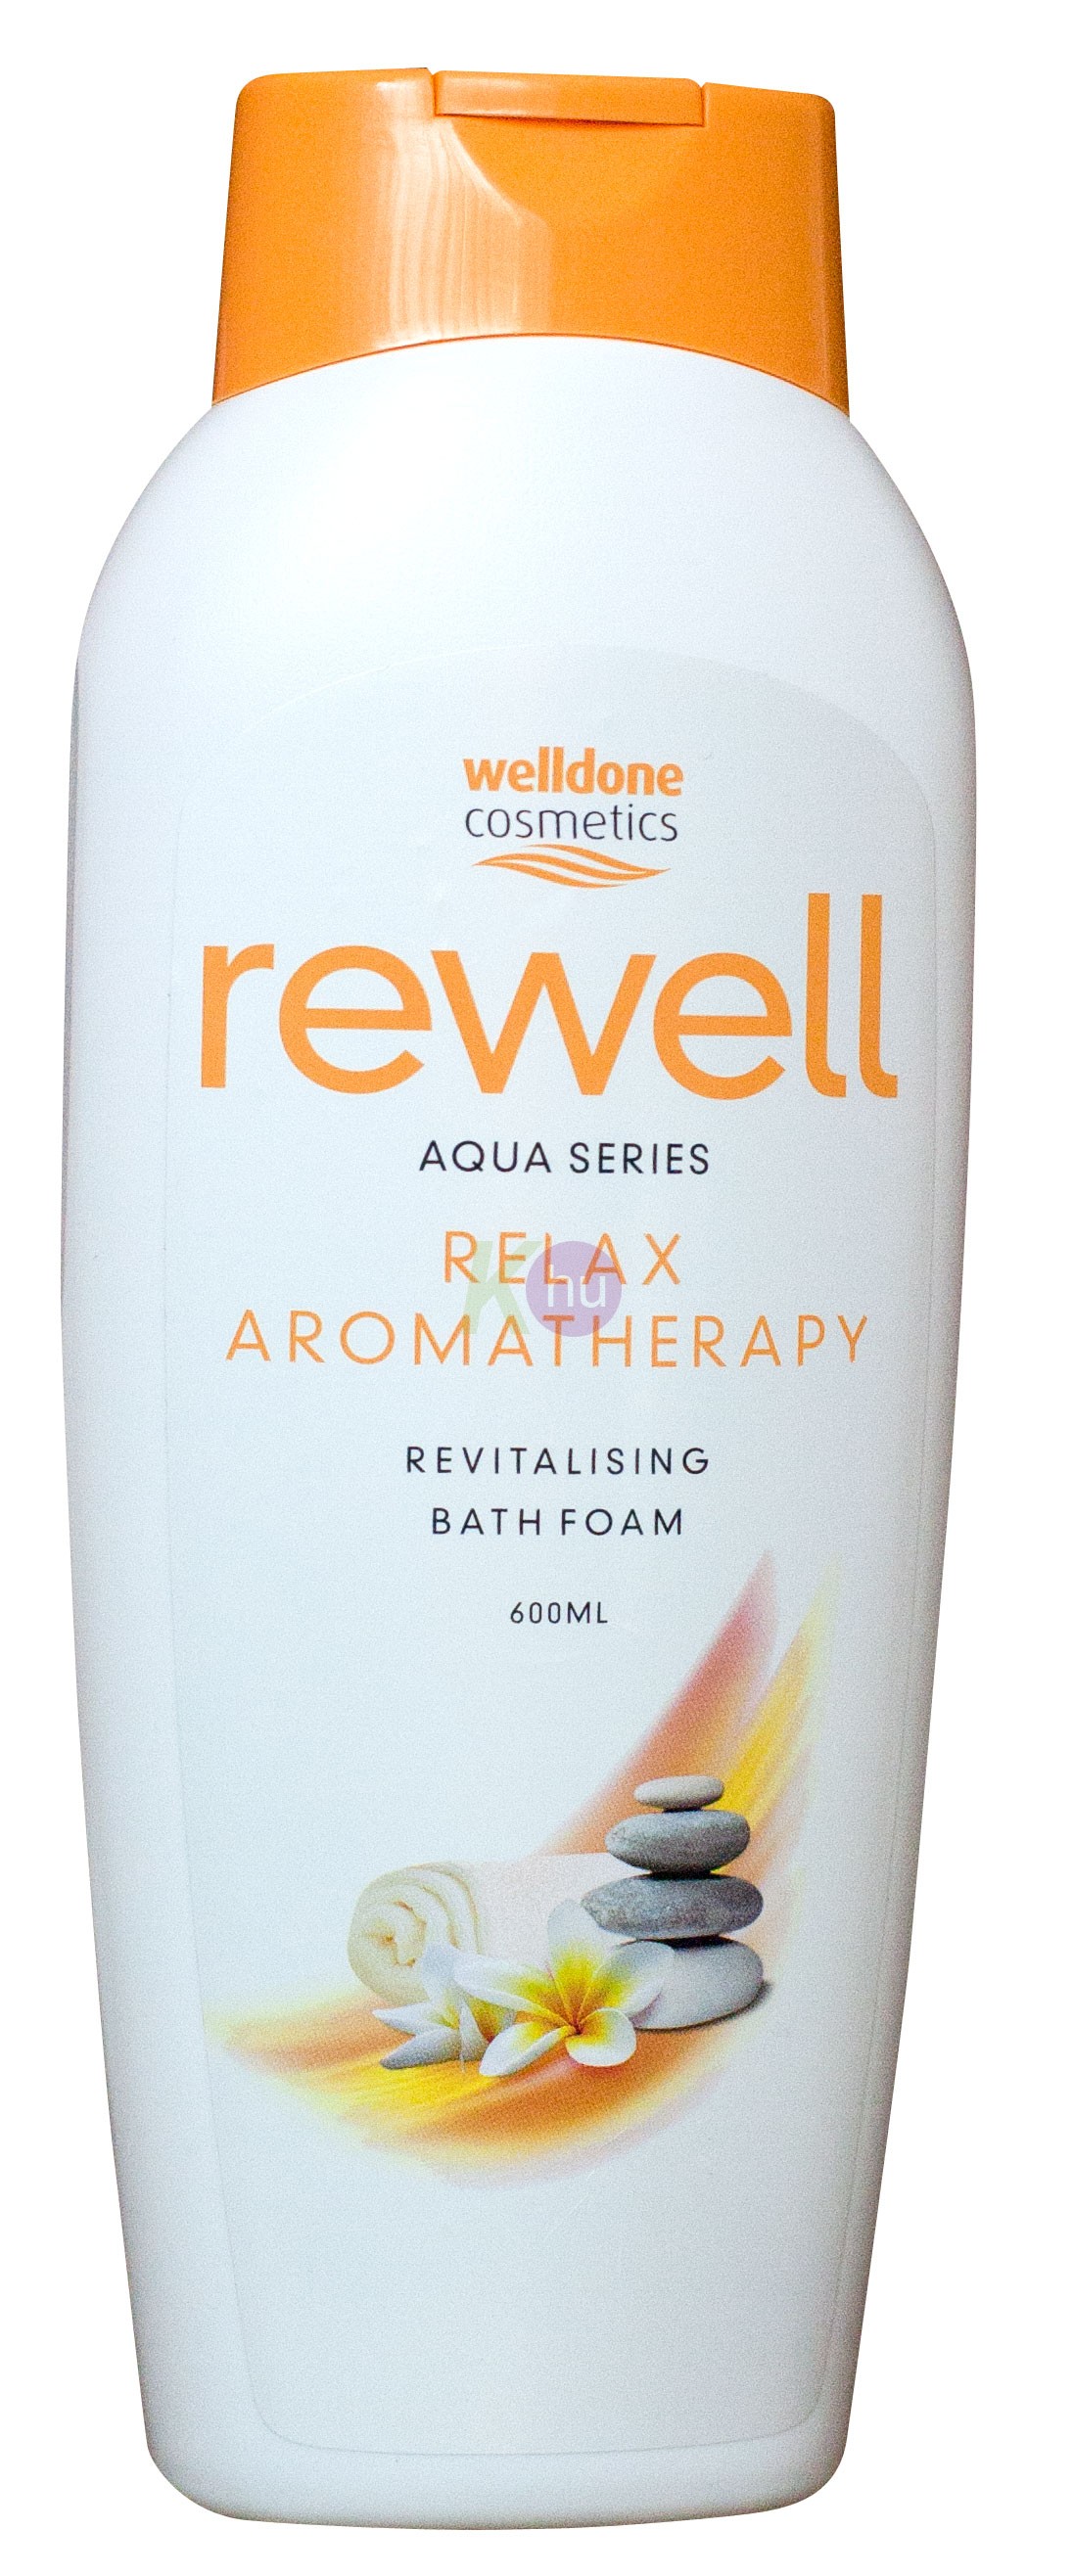 Rewell habfürdő 600ml relax aromatherapy 10020085